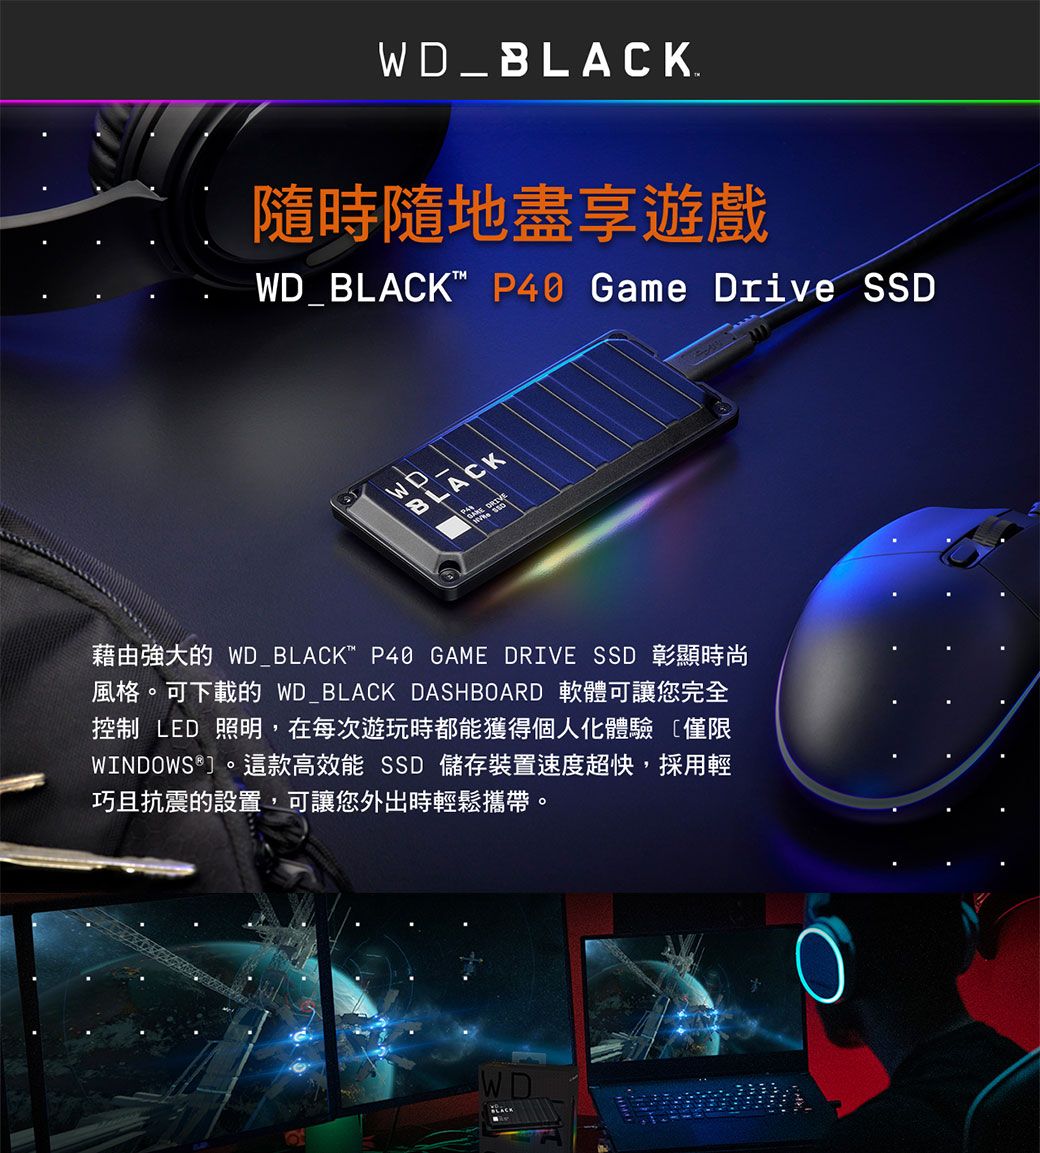 B隨時隨地盡享遊戲WD_BLACK P40 Game Drive WD_BLACK藉由強大的 WD_BLACK P40 GAME DRIVE SSD 彰顯時尚風格。可下載的 WD_BLACK DASHBOARD 軟體可讓您完全控制 LED 照明,在每次遊玩時都能獲得個人化體驗 僅限WINDOWS®。這款高效能 SSD 儲存裝置速度超快,採用輕巧且抗震的設置,可讓您外出時輕鬆攜帶。WDLACK